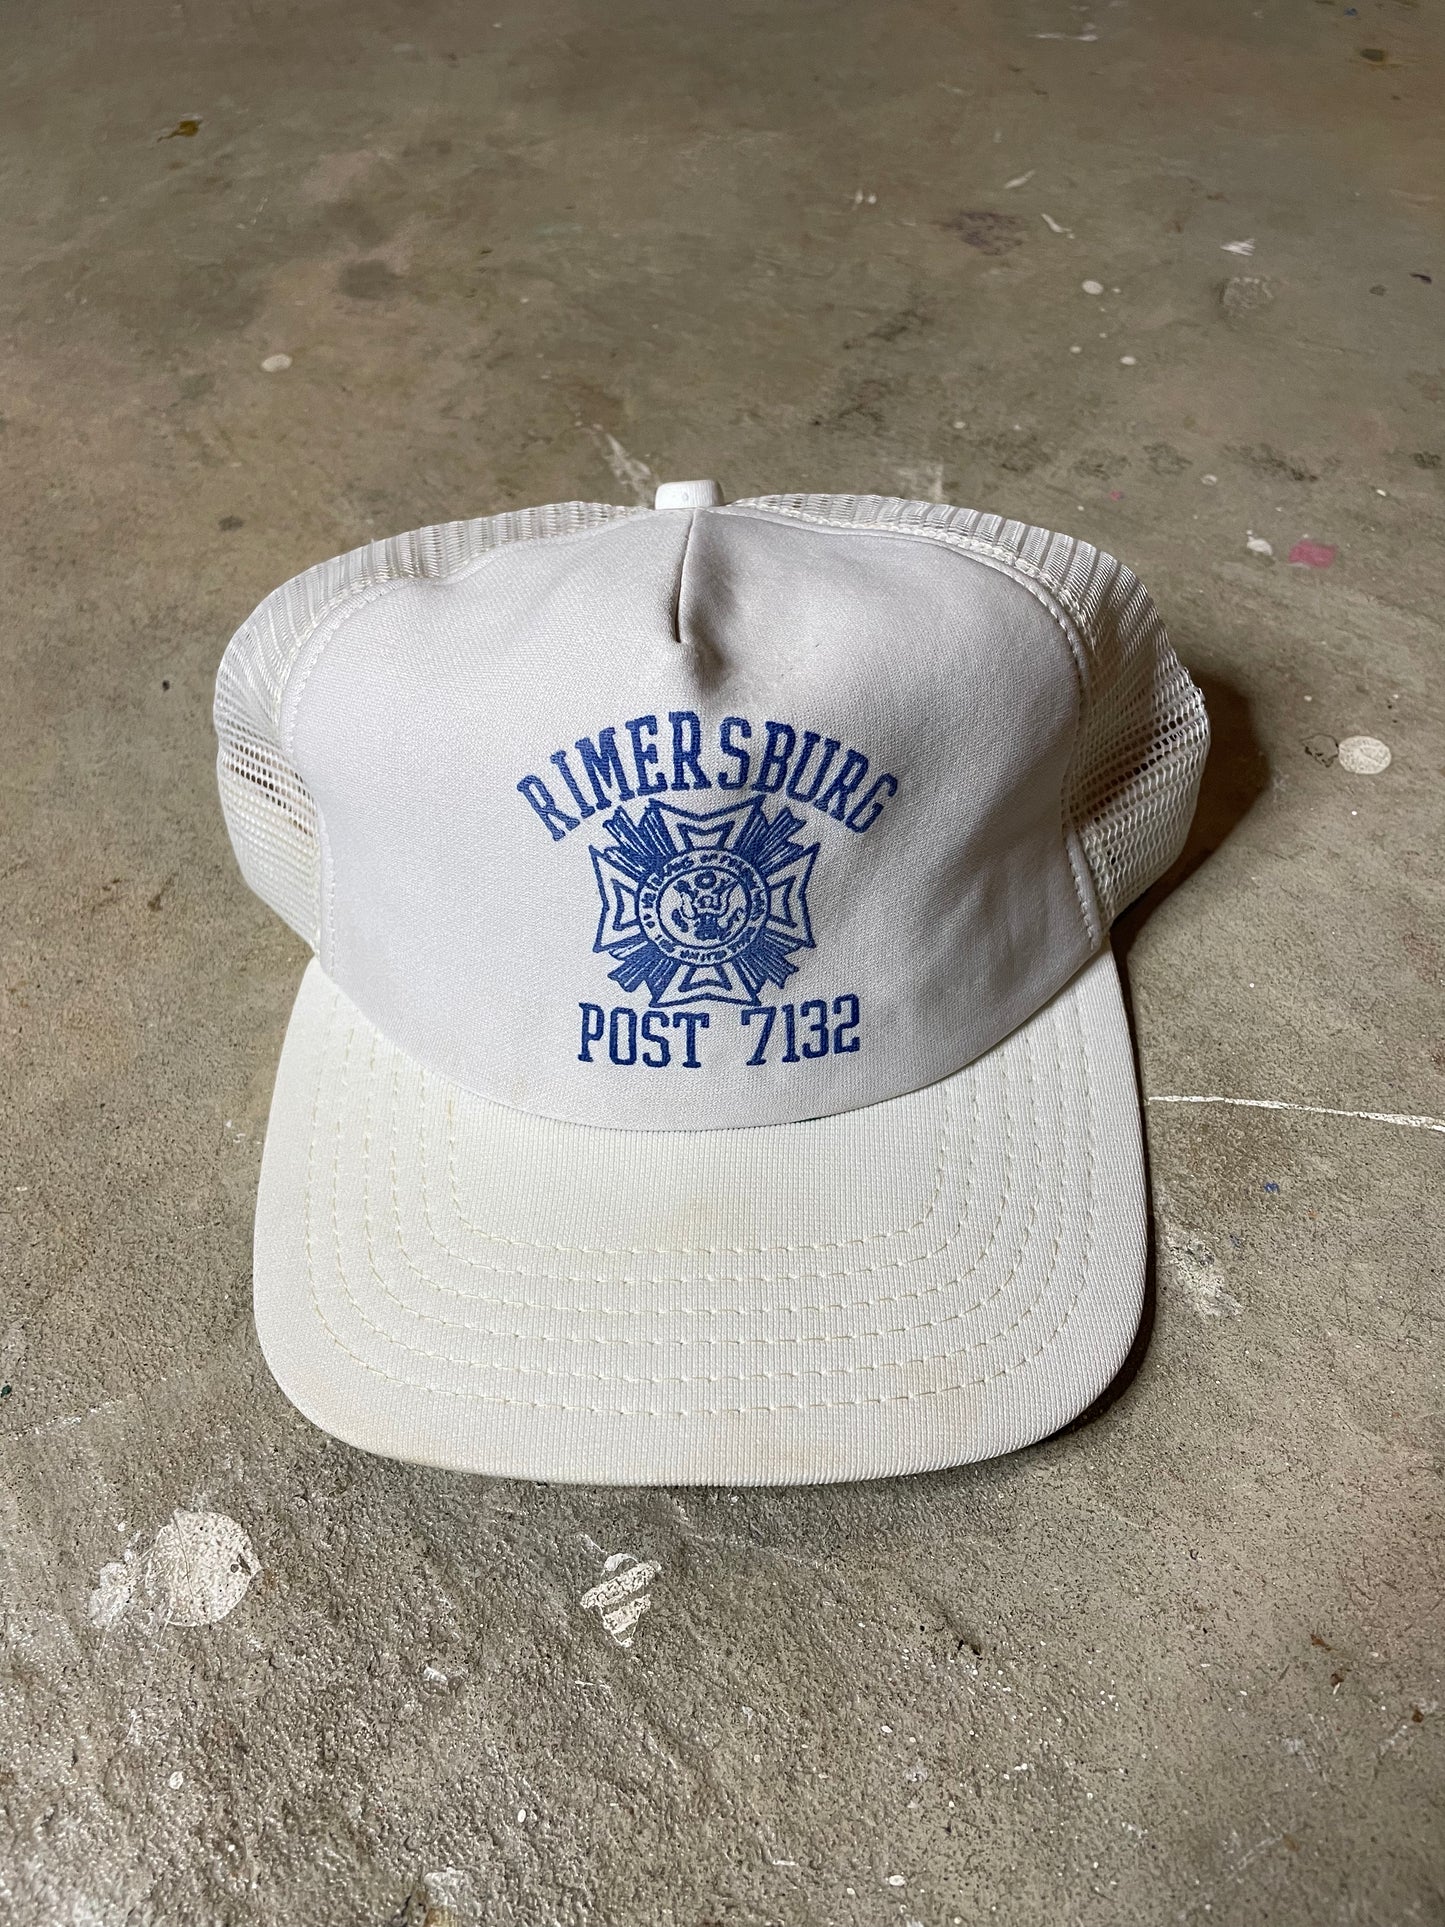 1990s Rimersburg Trucker Hat